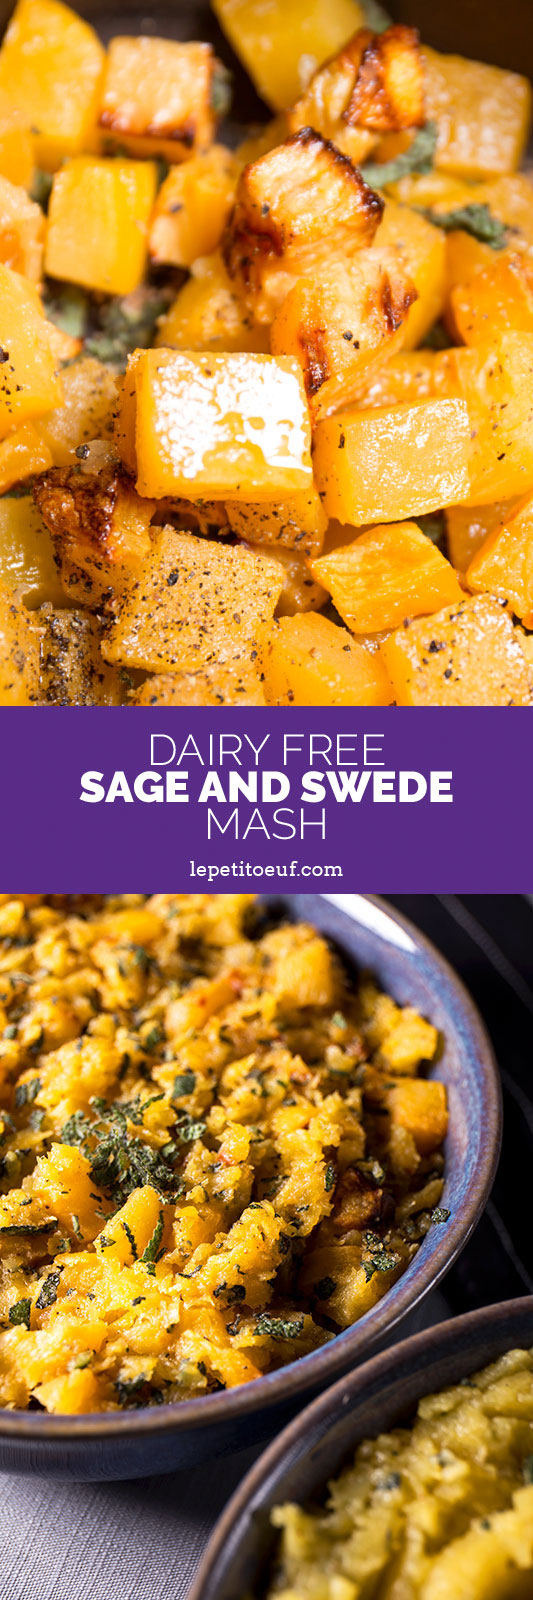 Dairy free sage and swede mash